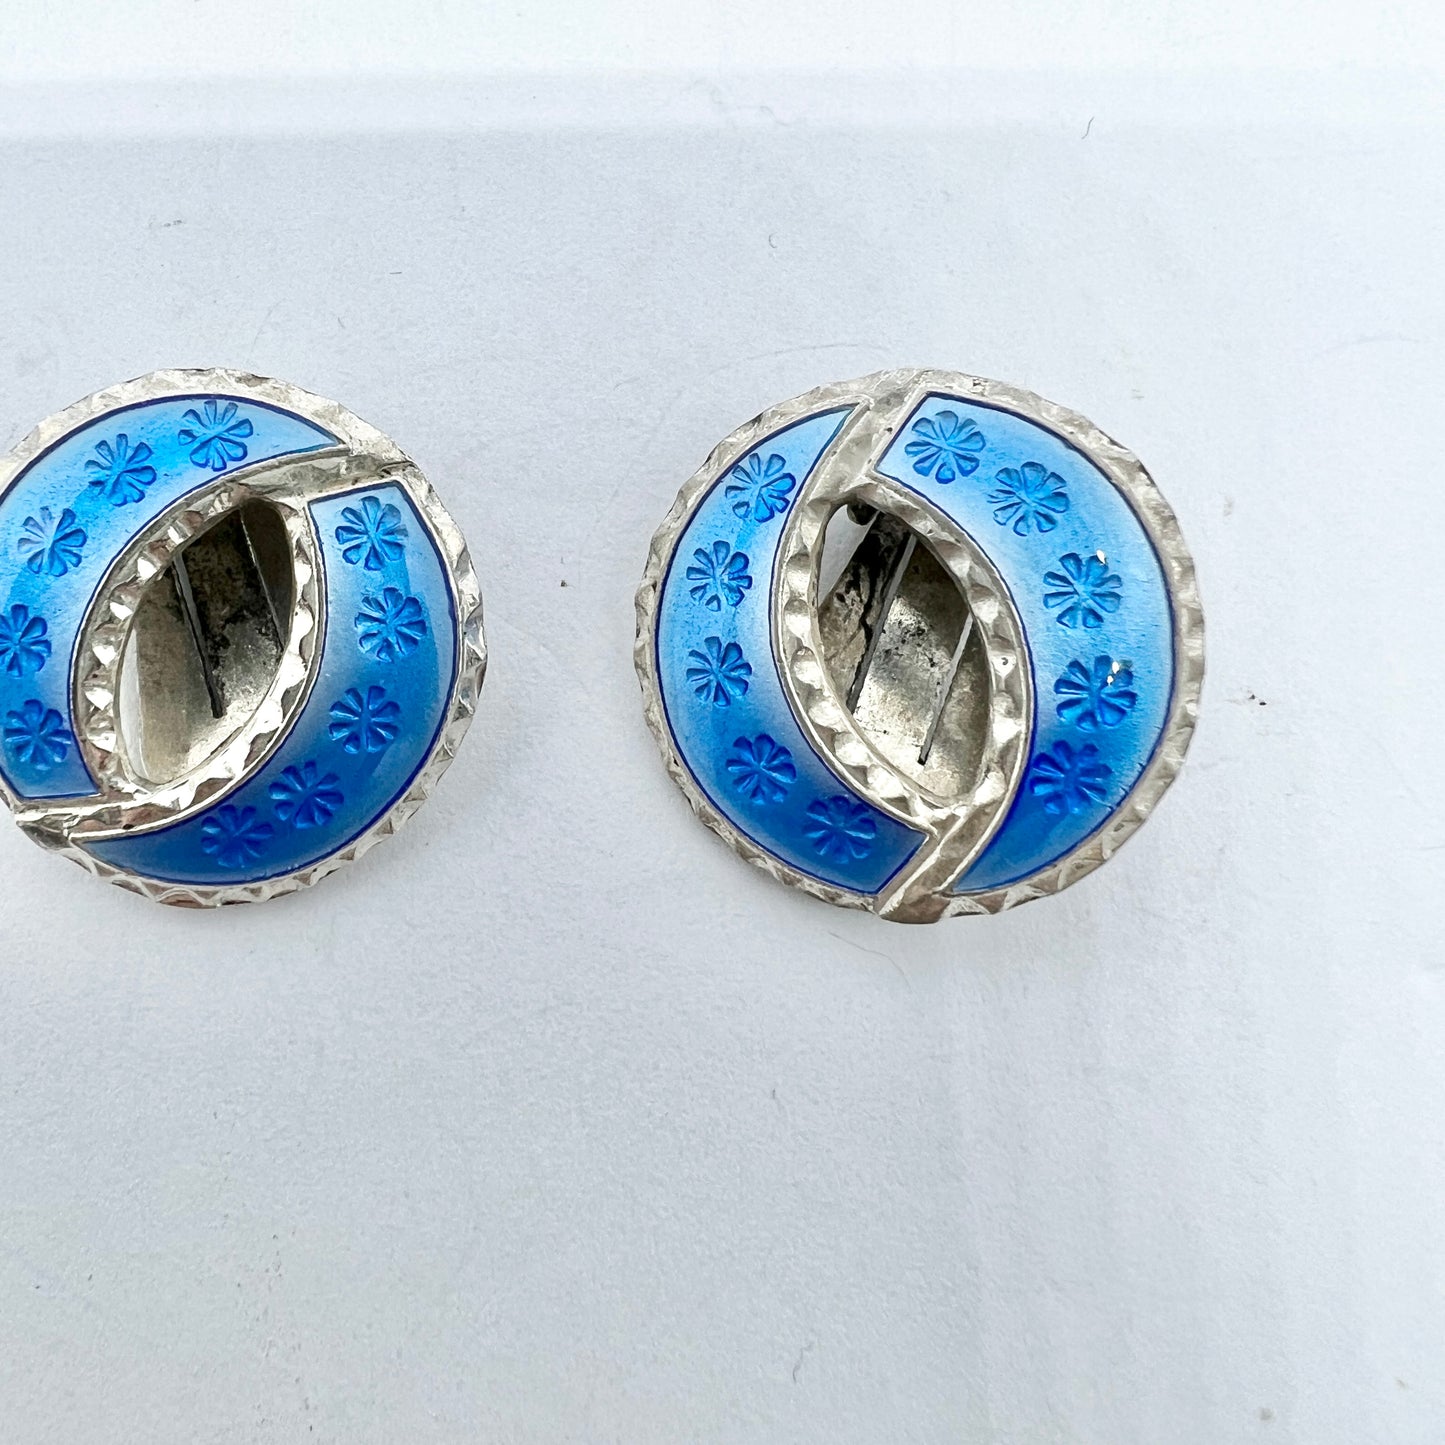 Andresen & Scheinpflug, Norway c 1950s. Sterling Silver Blue Enamel Necklace + Earrings.